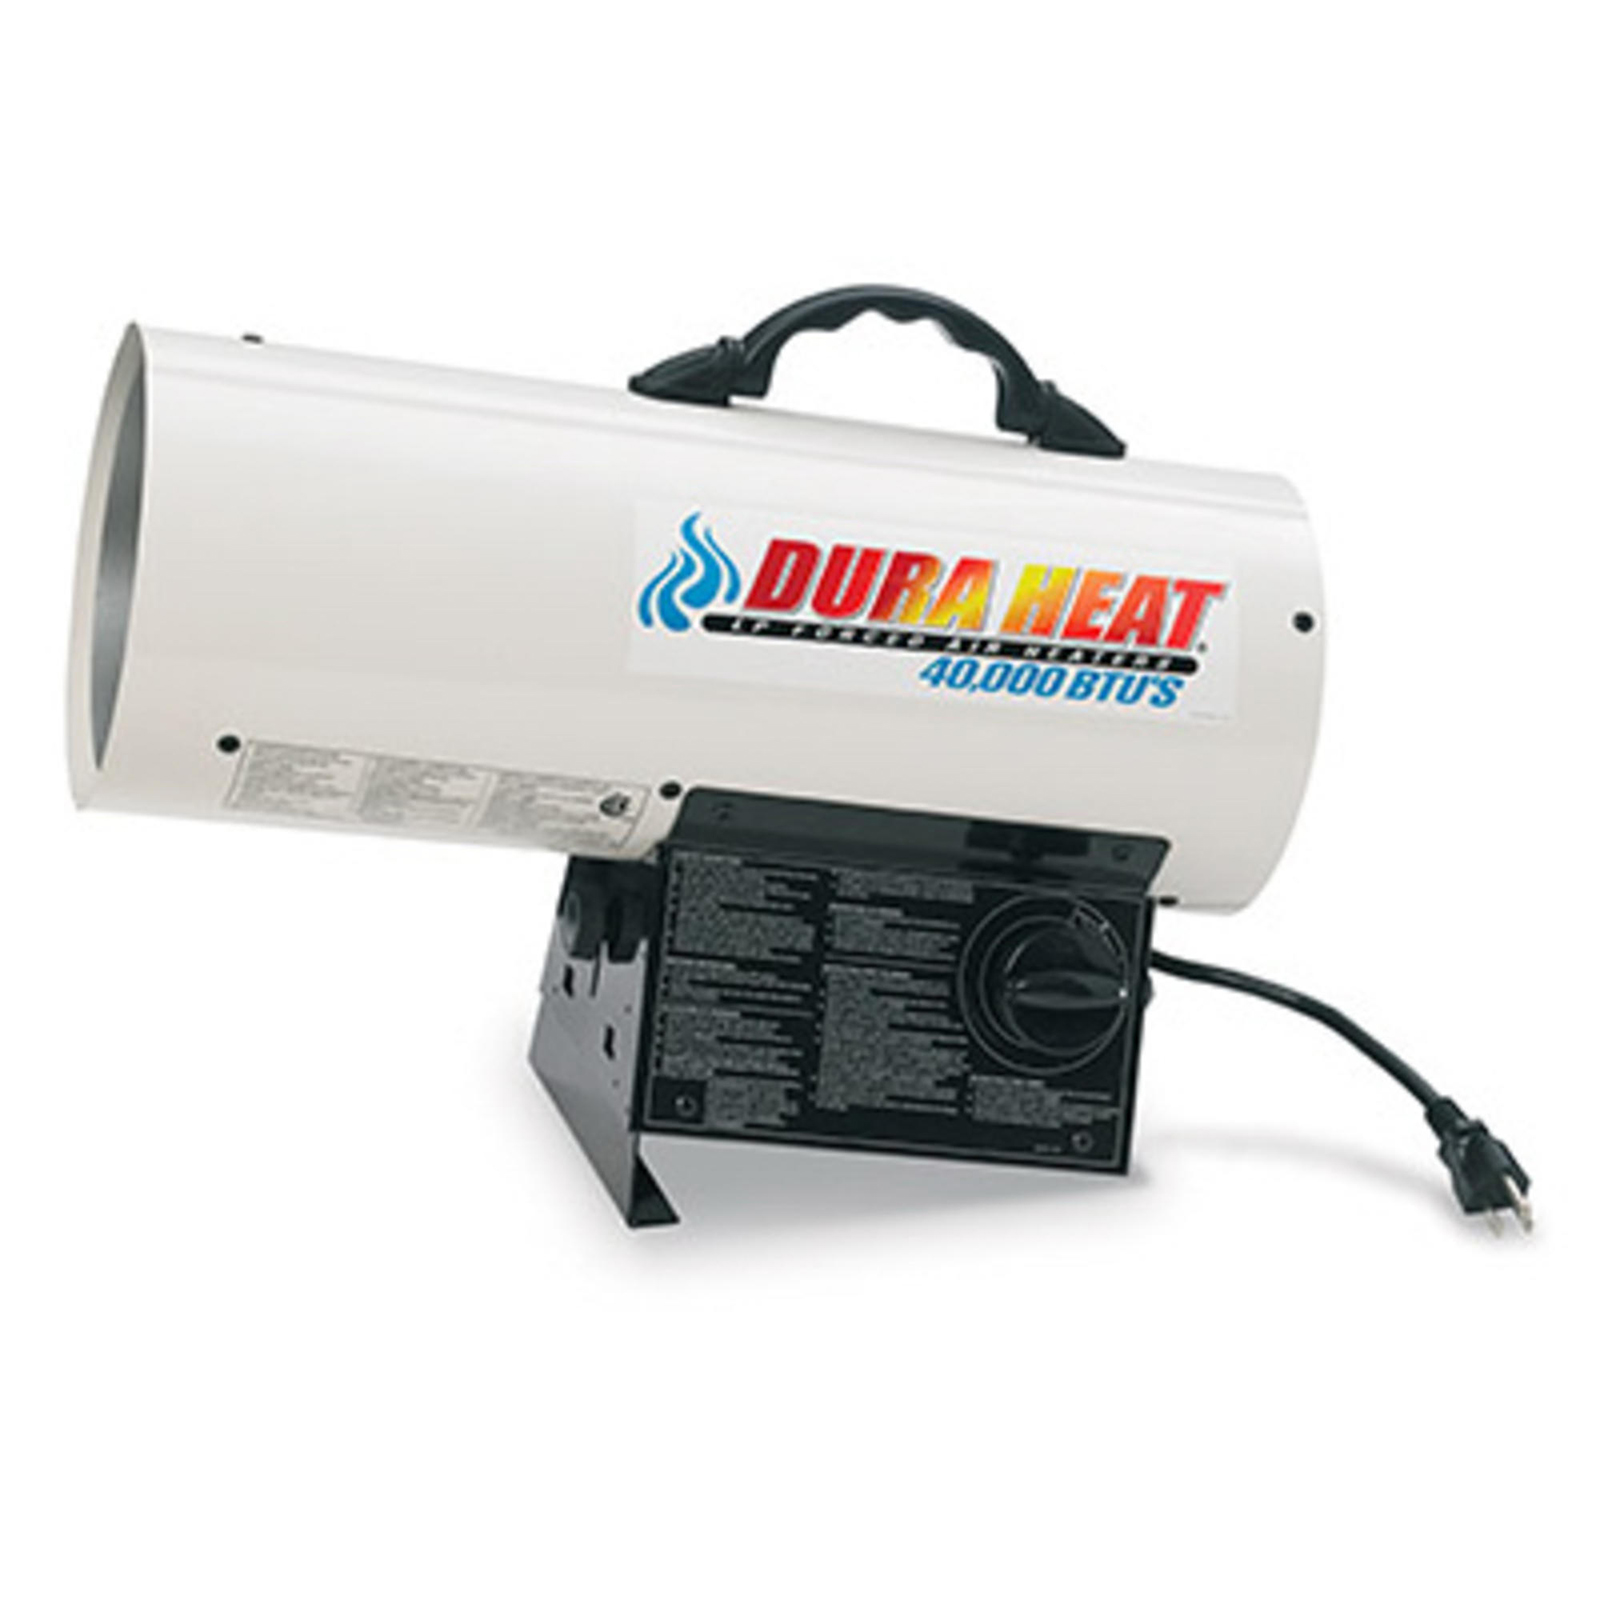 Dura Heat GFA40 40,000BTU Forced Air Propane Heater with LP Regulator - Silver